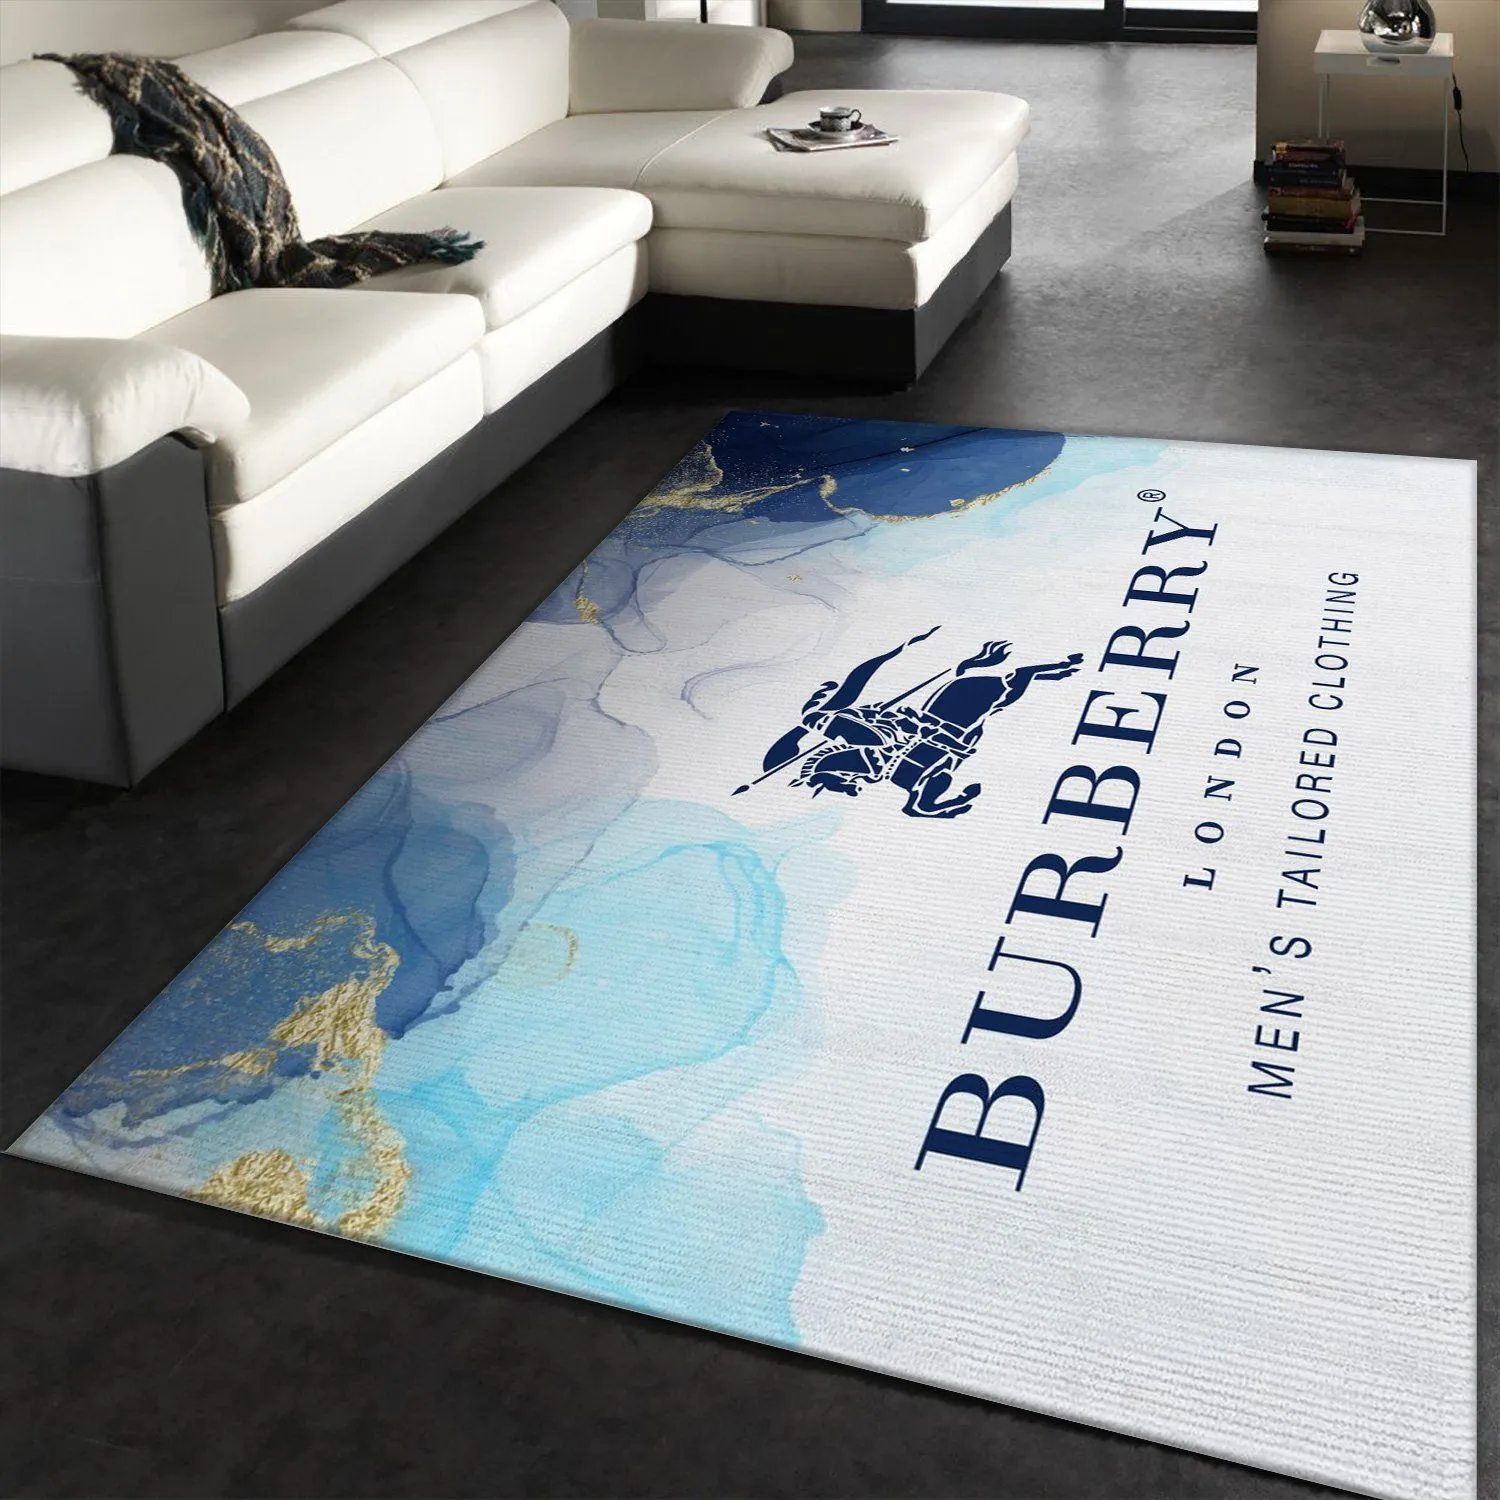 Burberry Rectangle Rug Door Mat Home Decor Luxury Area Carpet Fashion Brand